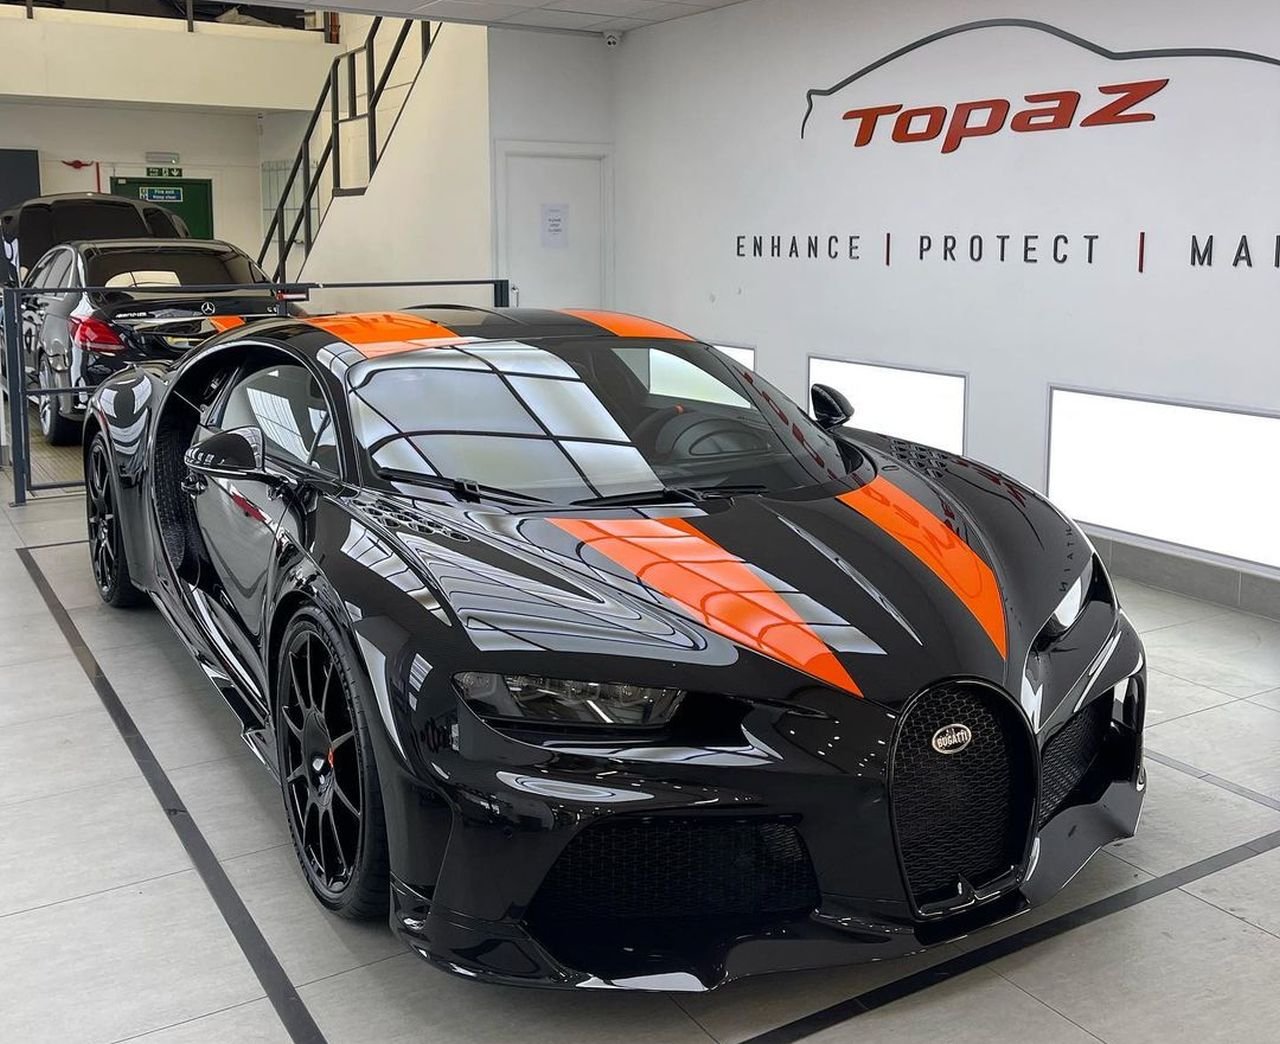 https://www.thesupercarblog.com/wp-content/uploads/2022/01/Bugatti-Chiron-Super-Sport-300Topaz-Detailing-2.jpg